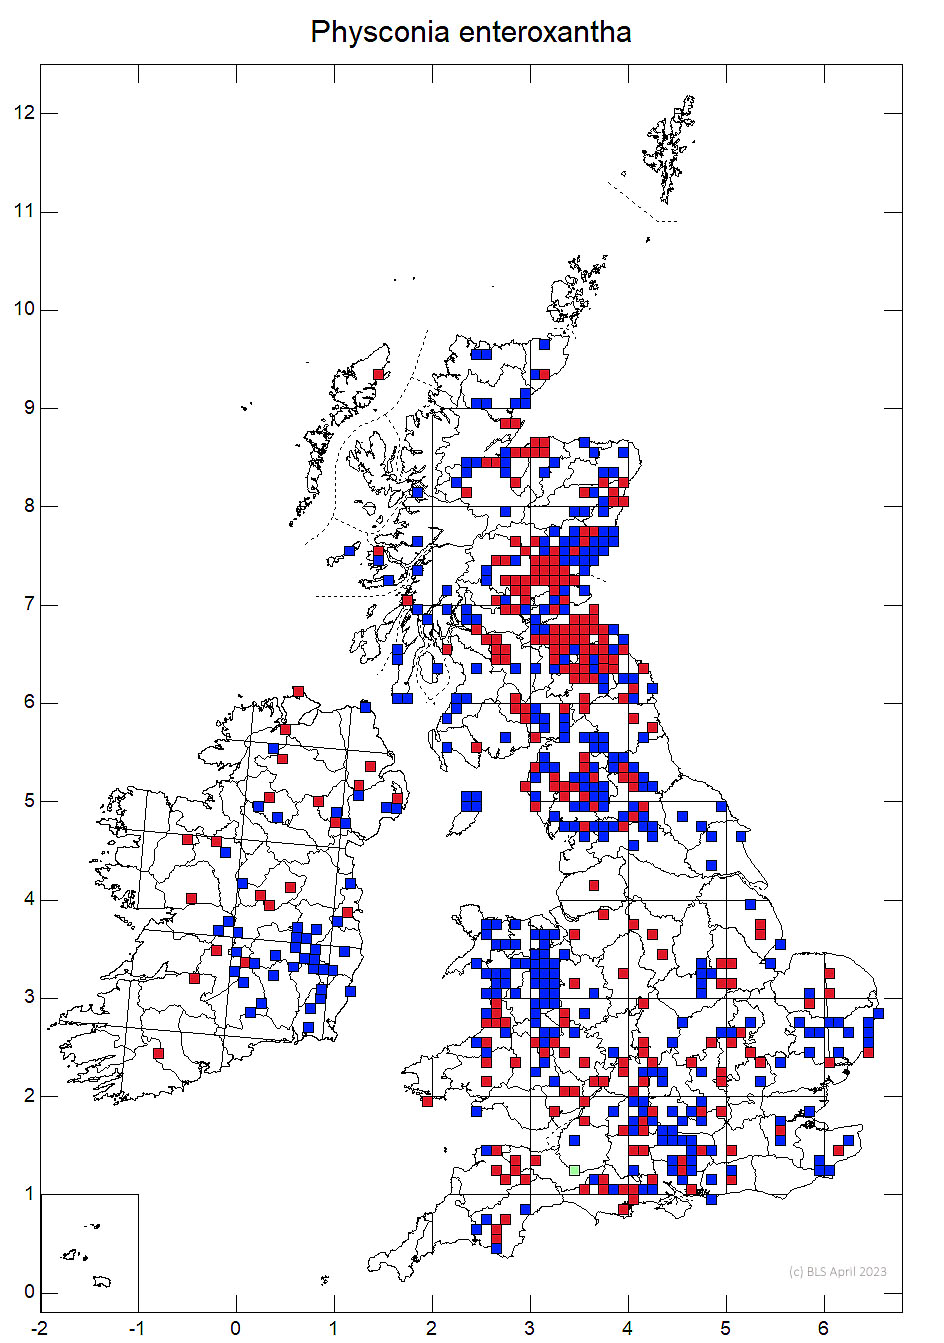 Physconia enteroxantha 10km sq distribution map